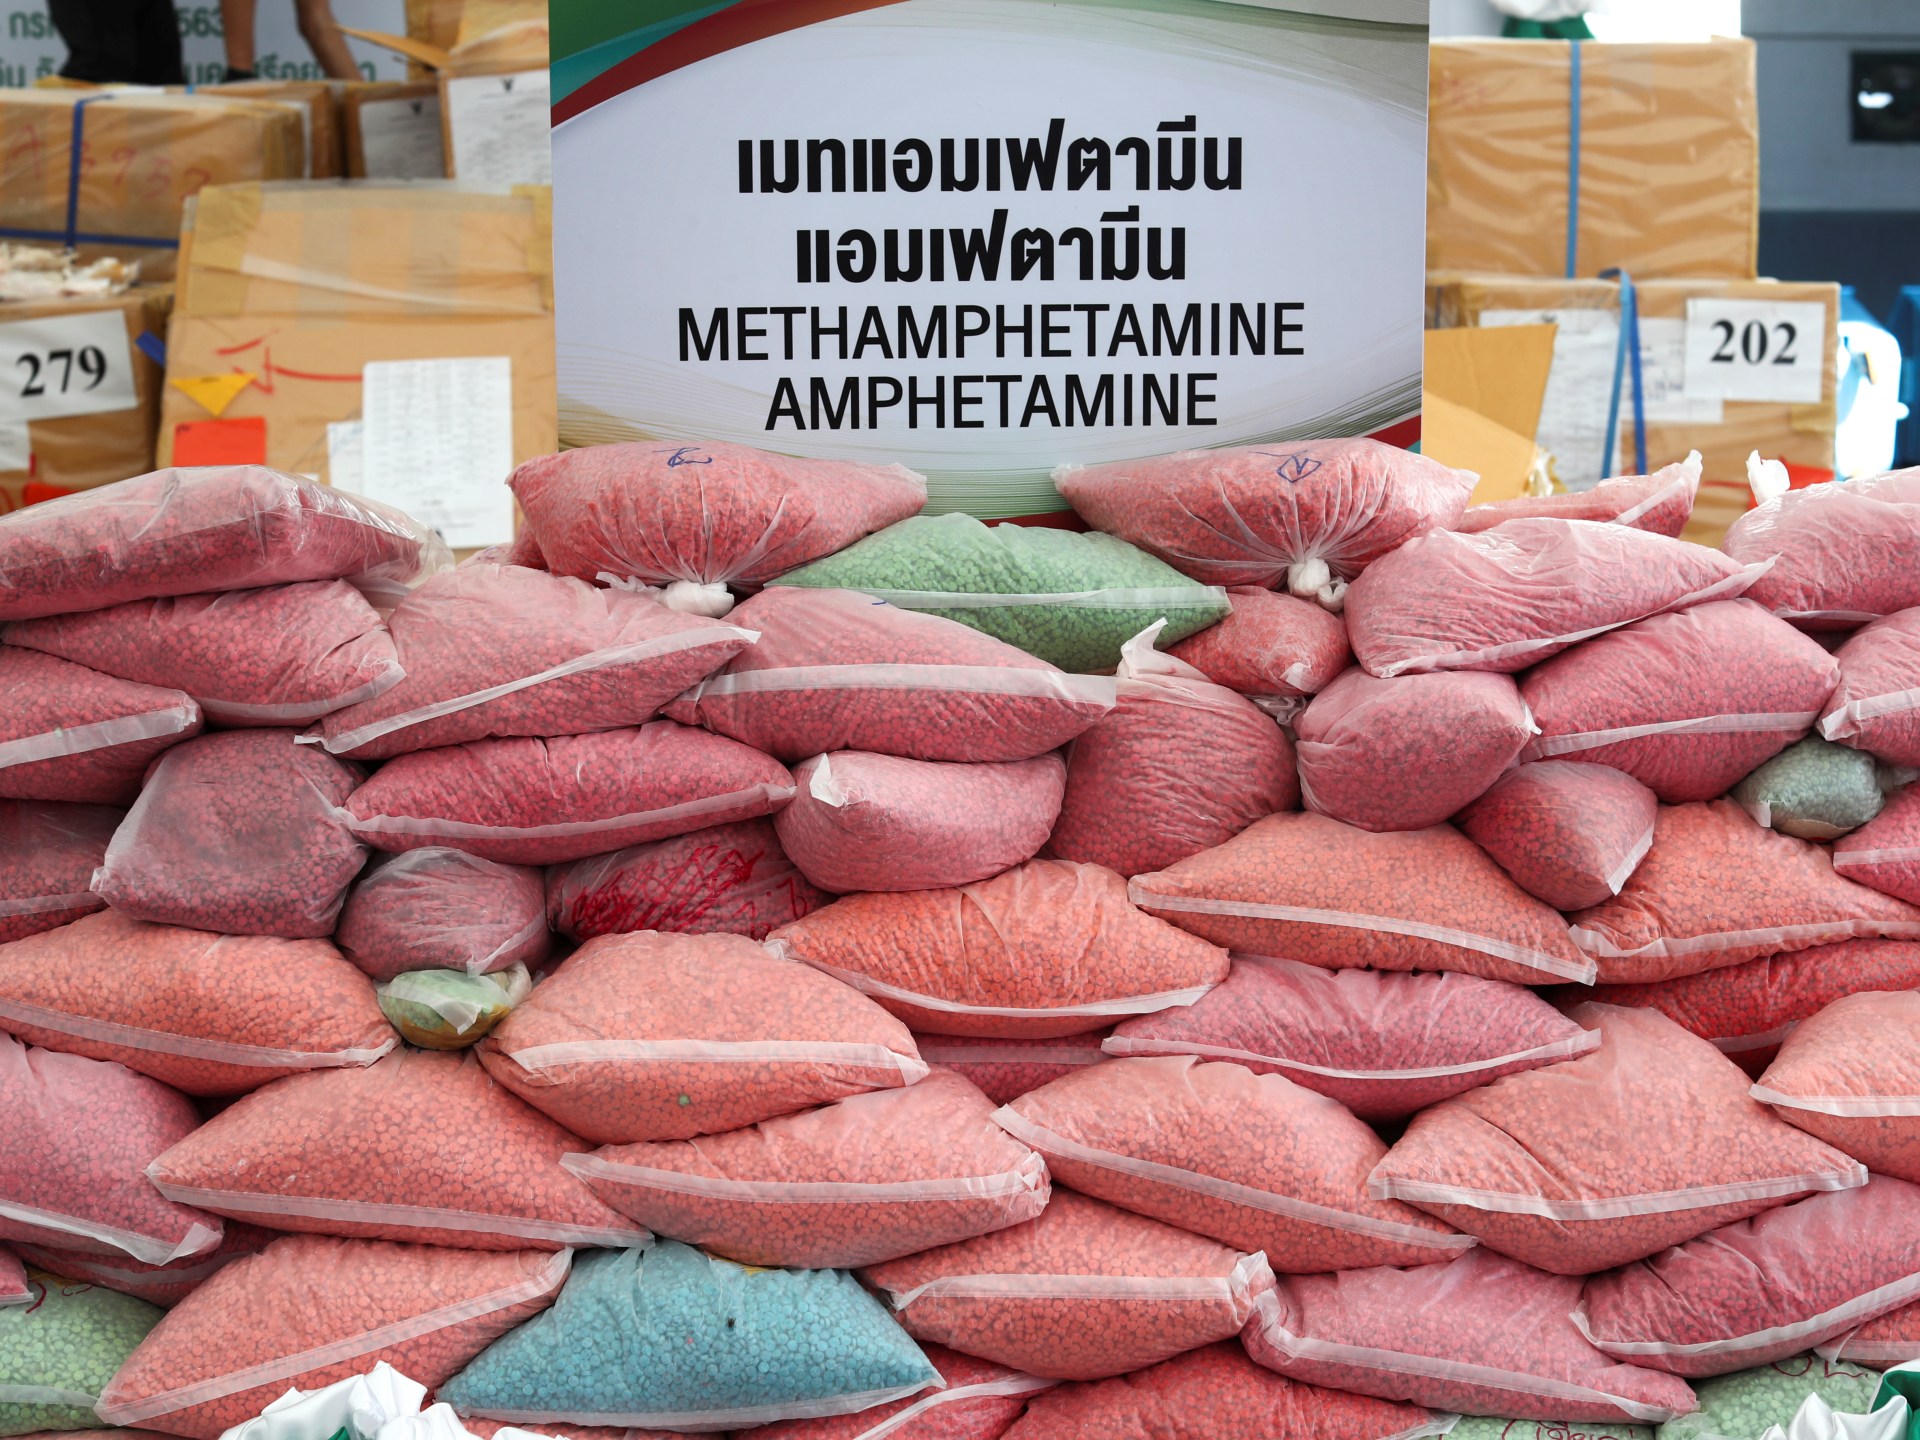 Thai police seize $8.15m worth methamphetamine pills, other drugs